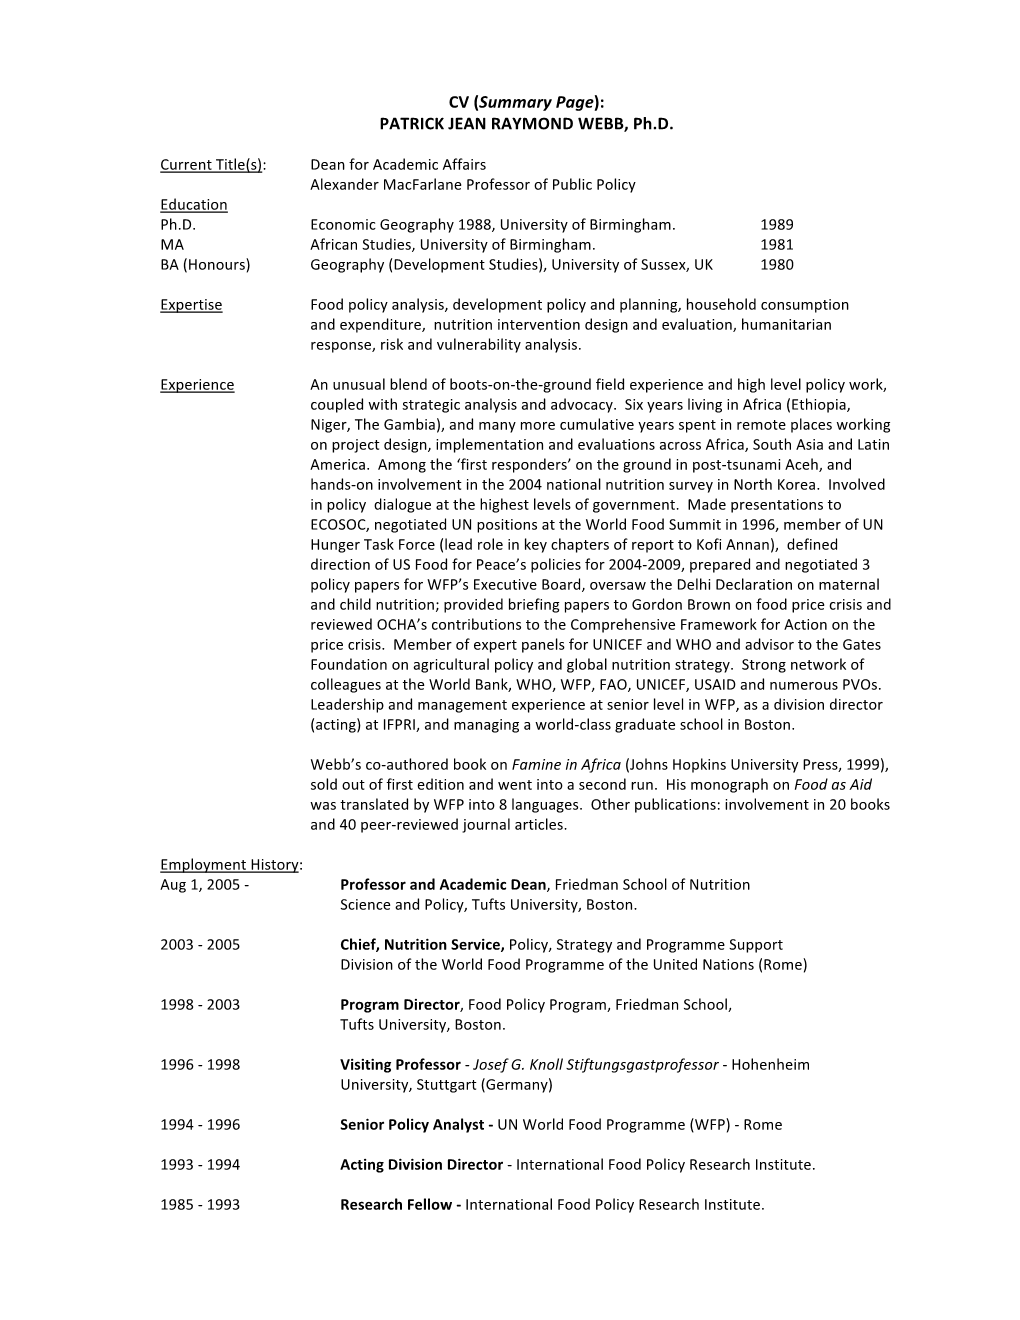 CV (Summary Page): PATRICK JEAN RAYMOND WEBB, Ph.D